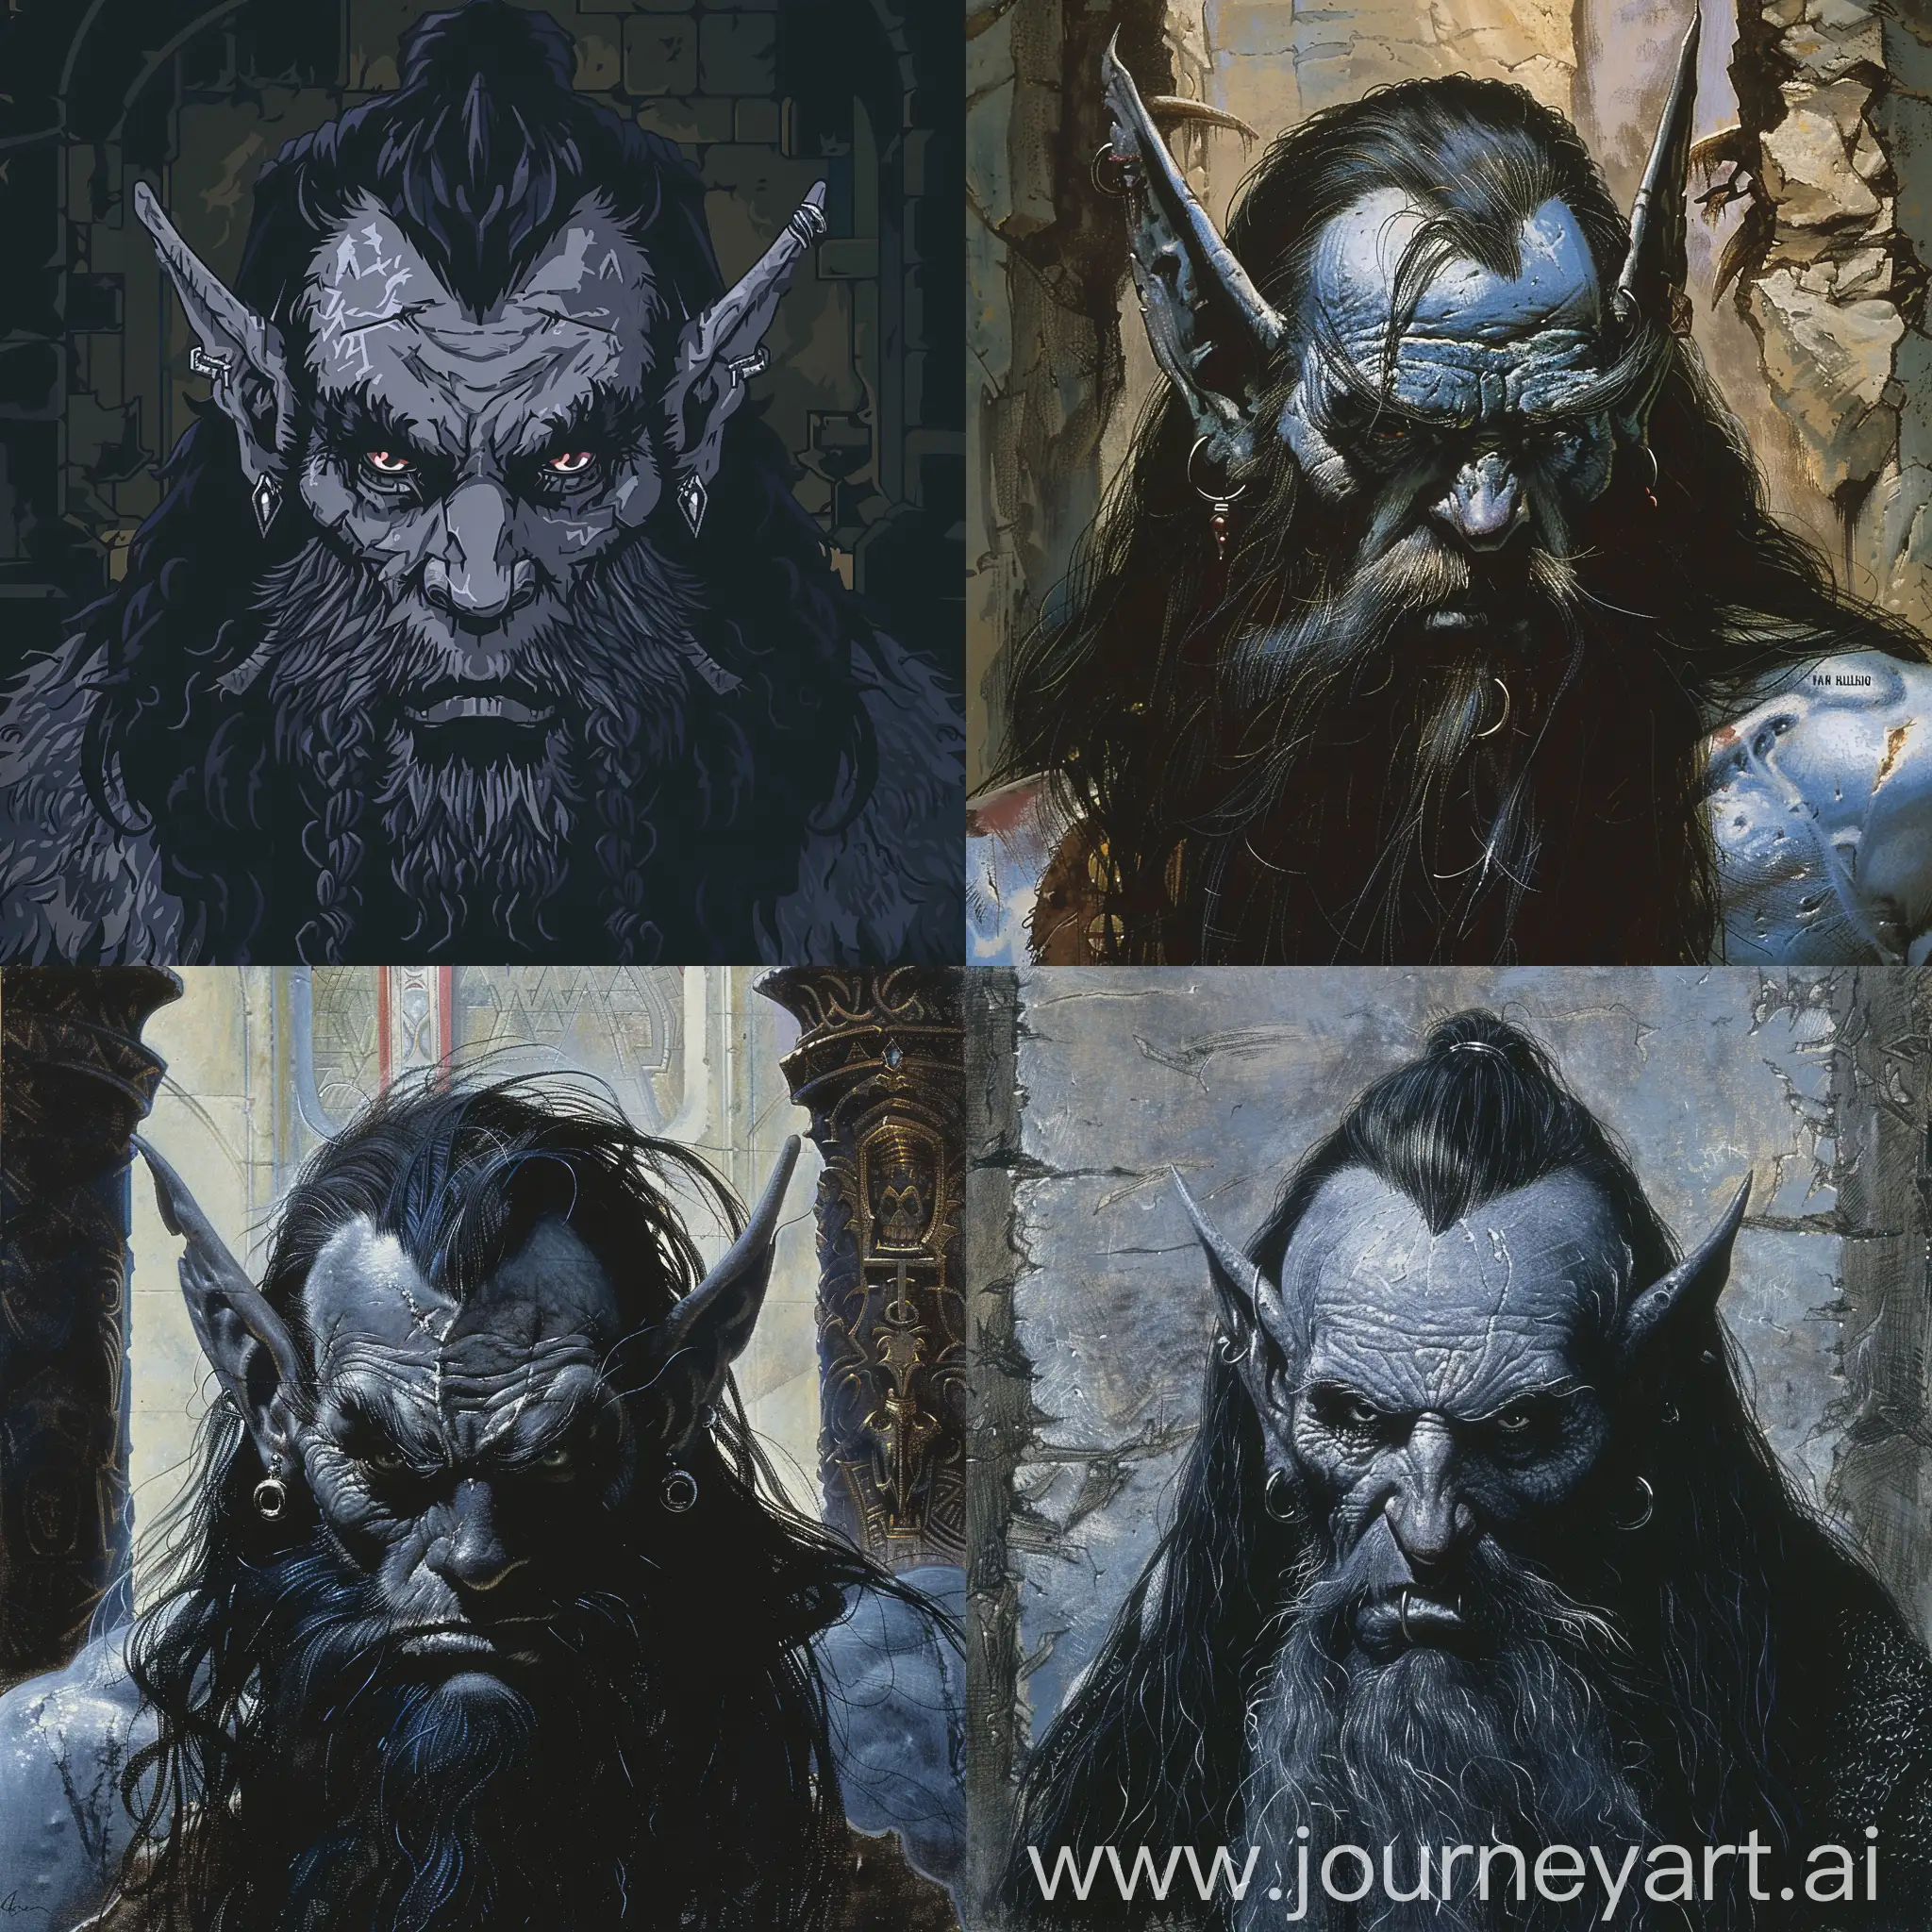 Sinister-GreySkinned-Barbarian-in-Dungeon-Setting-Van-Hellsing-Art-Style